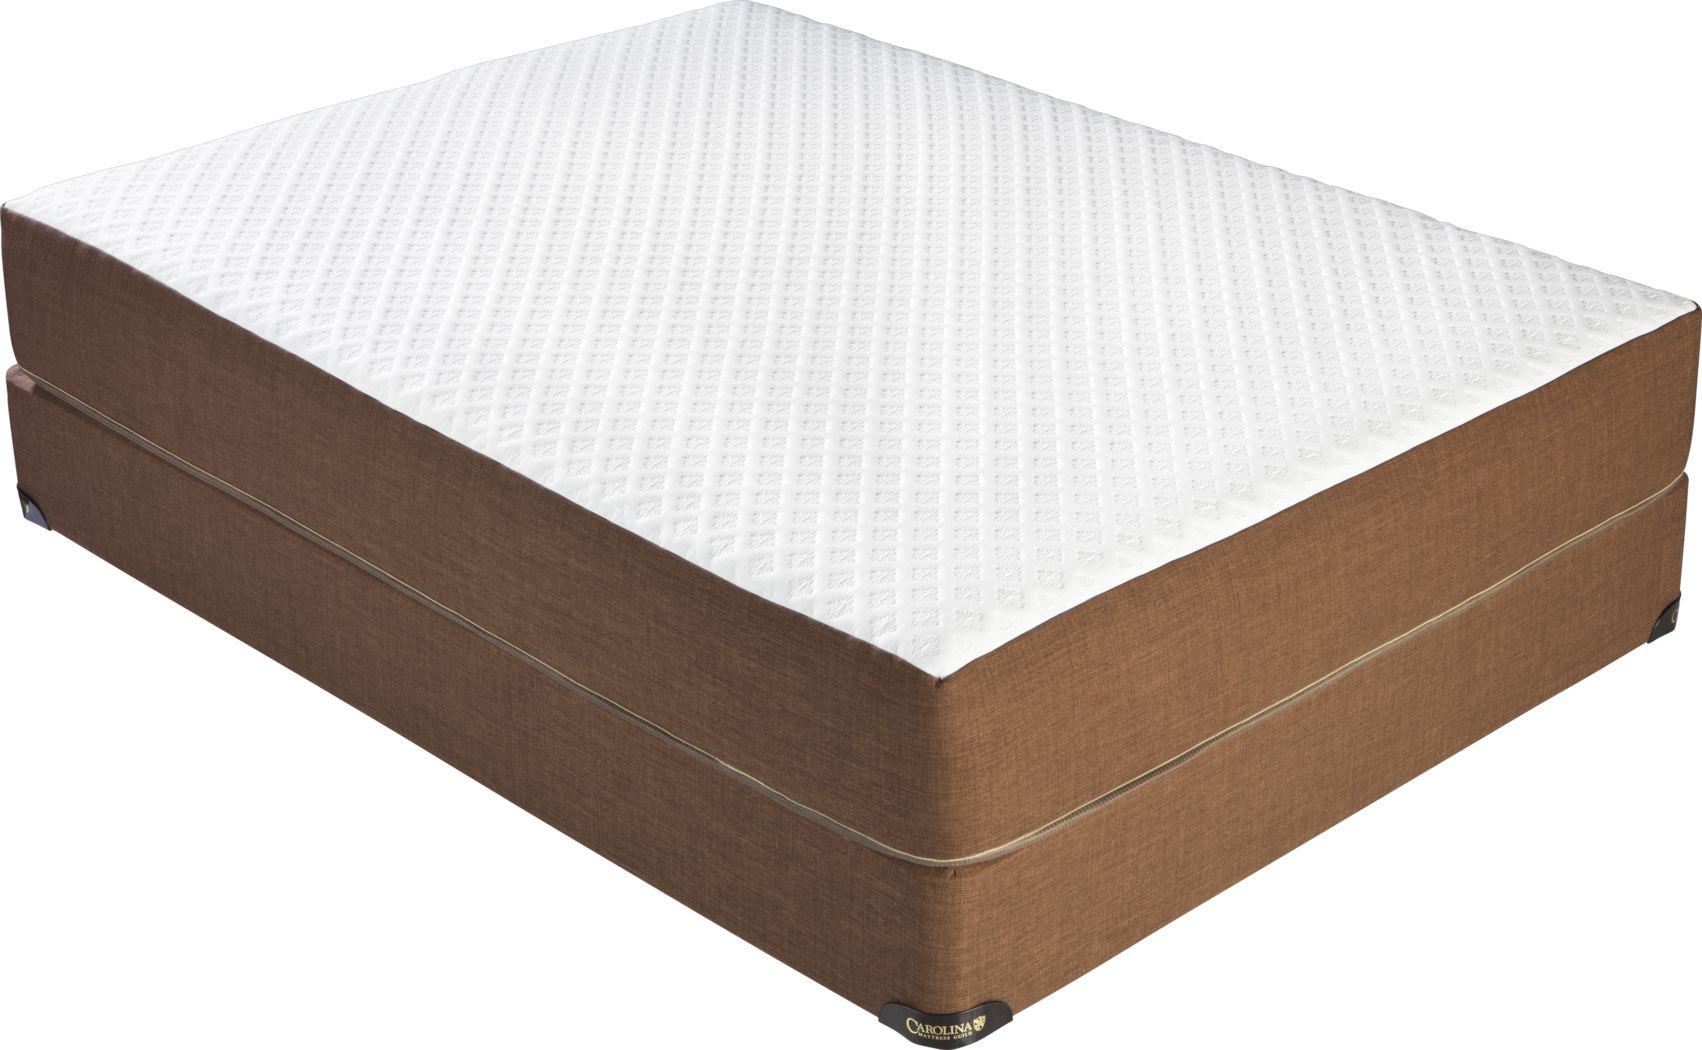 easy sleep mattress from carolina mattress guild